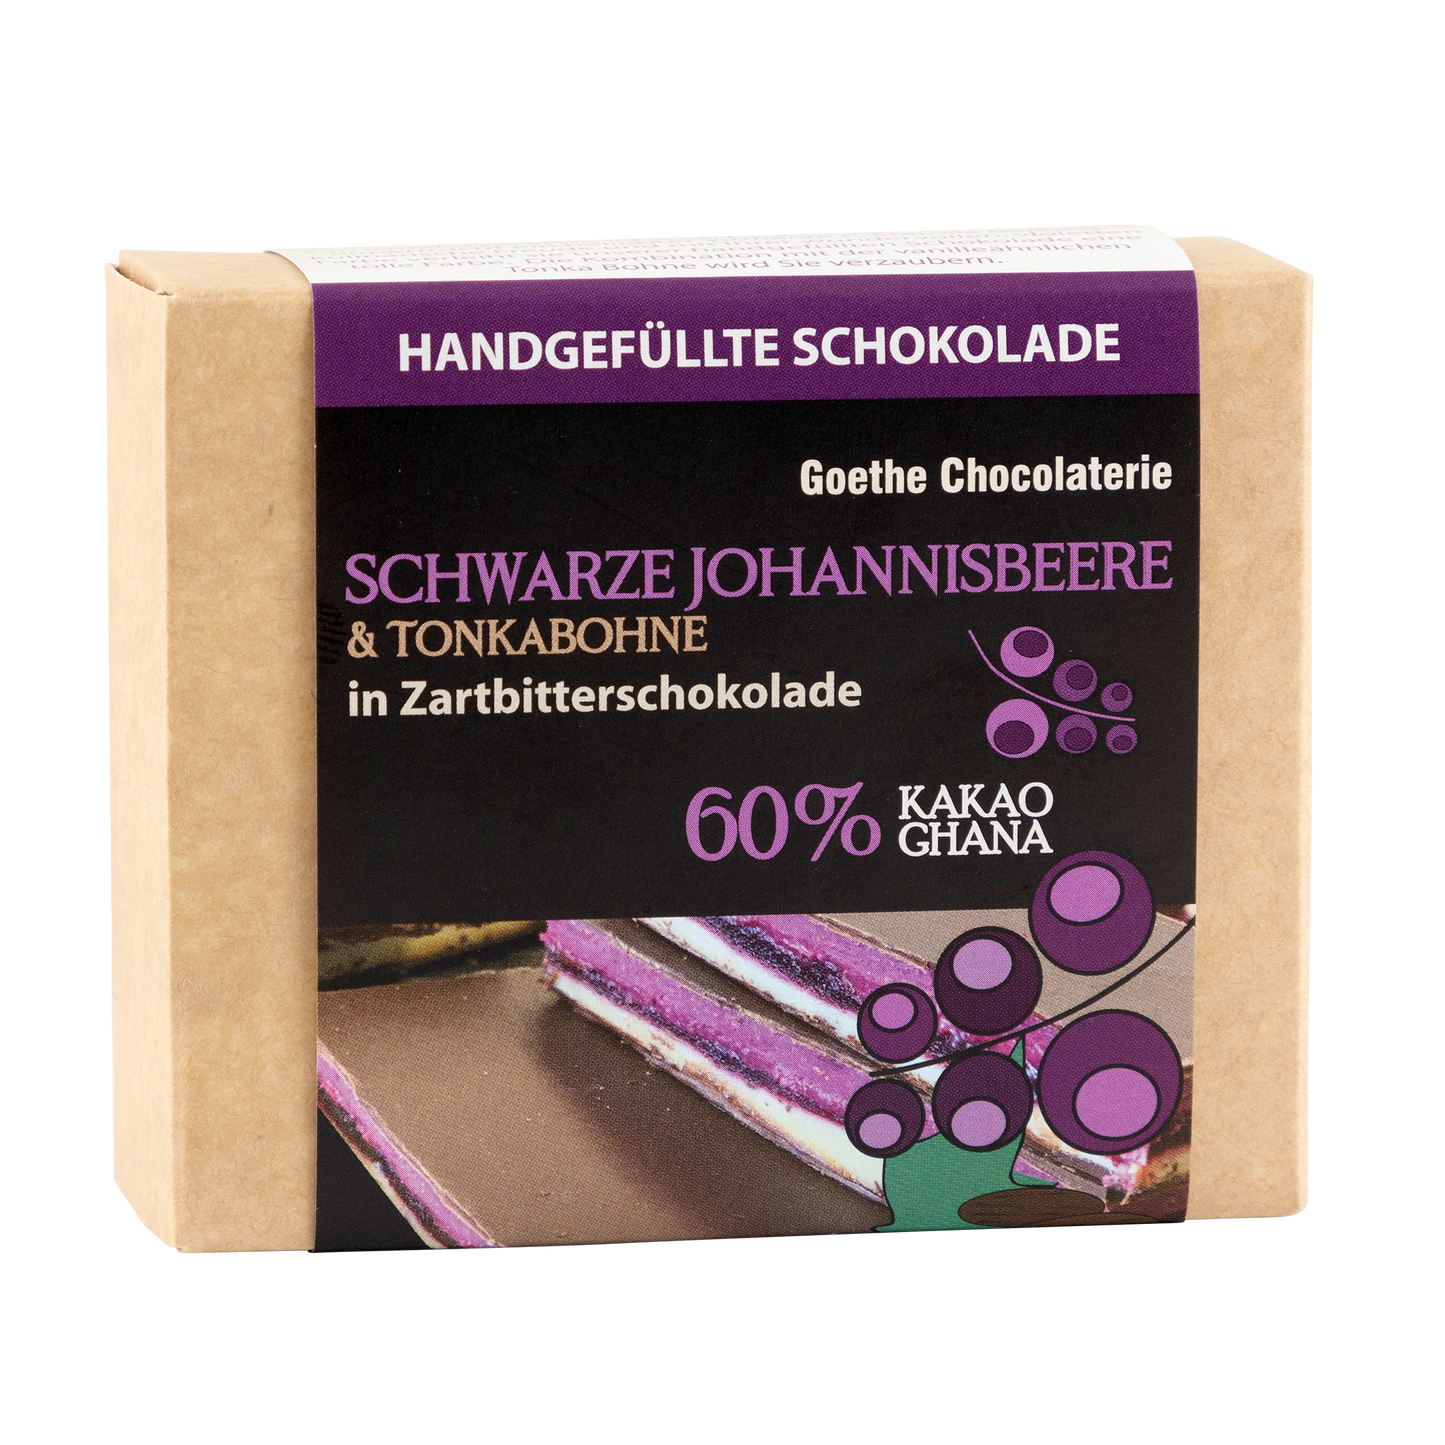 Handgefüllte Schokolade - Schwarze Johannisbeere & Tonkabohne